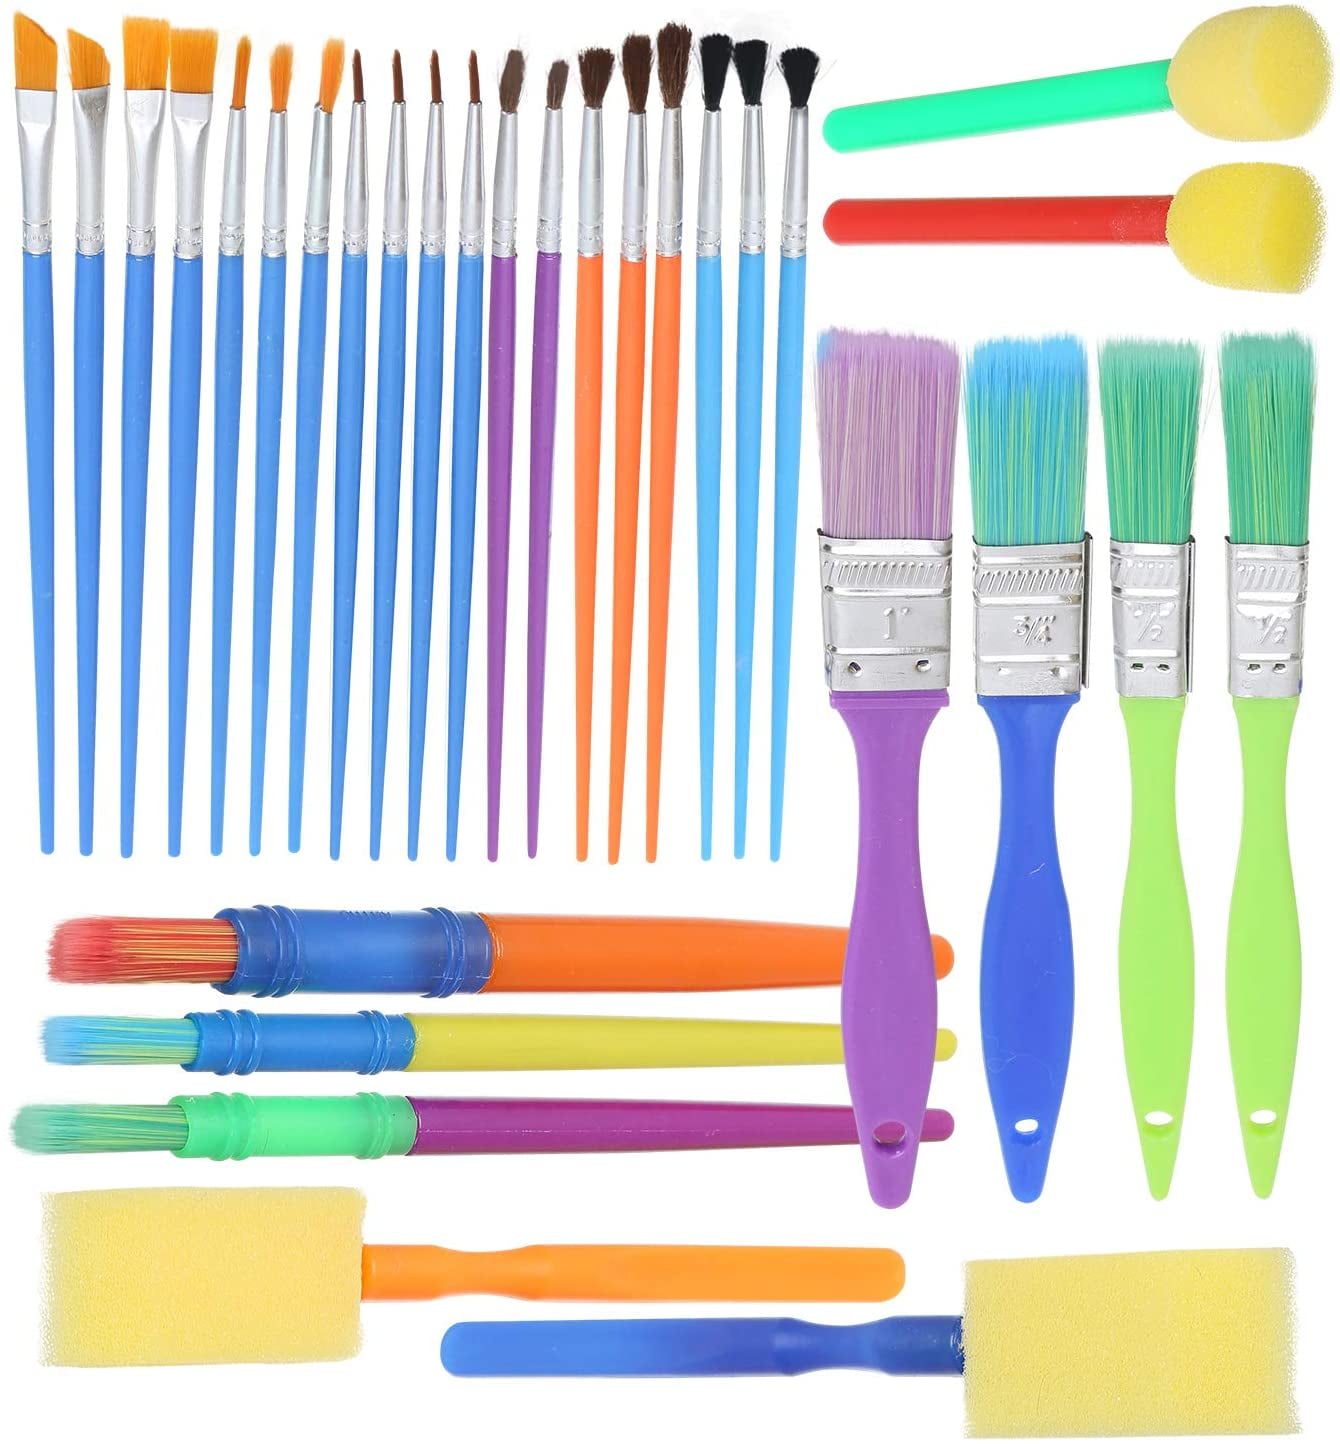  Paint Brushes, Anezus 30 Kids Paint Brushes Bulk Children Paint  Brushes Set with Jumbo Round Watercolor Paint Brush and Large Flat Craft Paint  Brushes